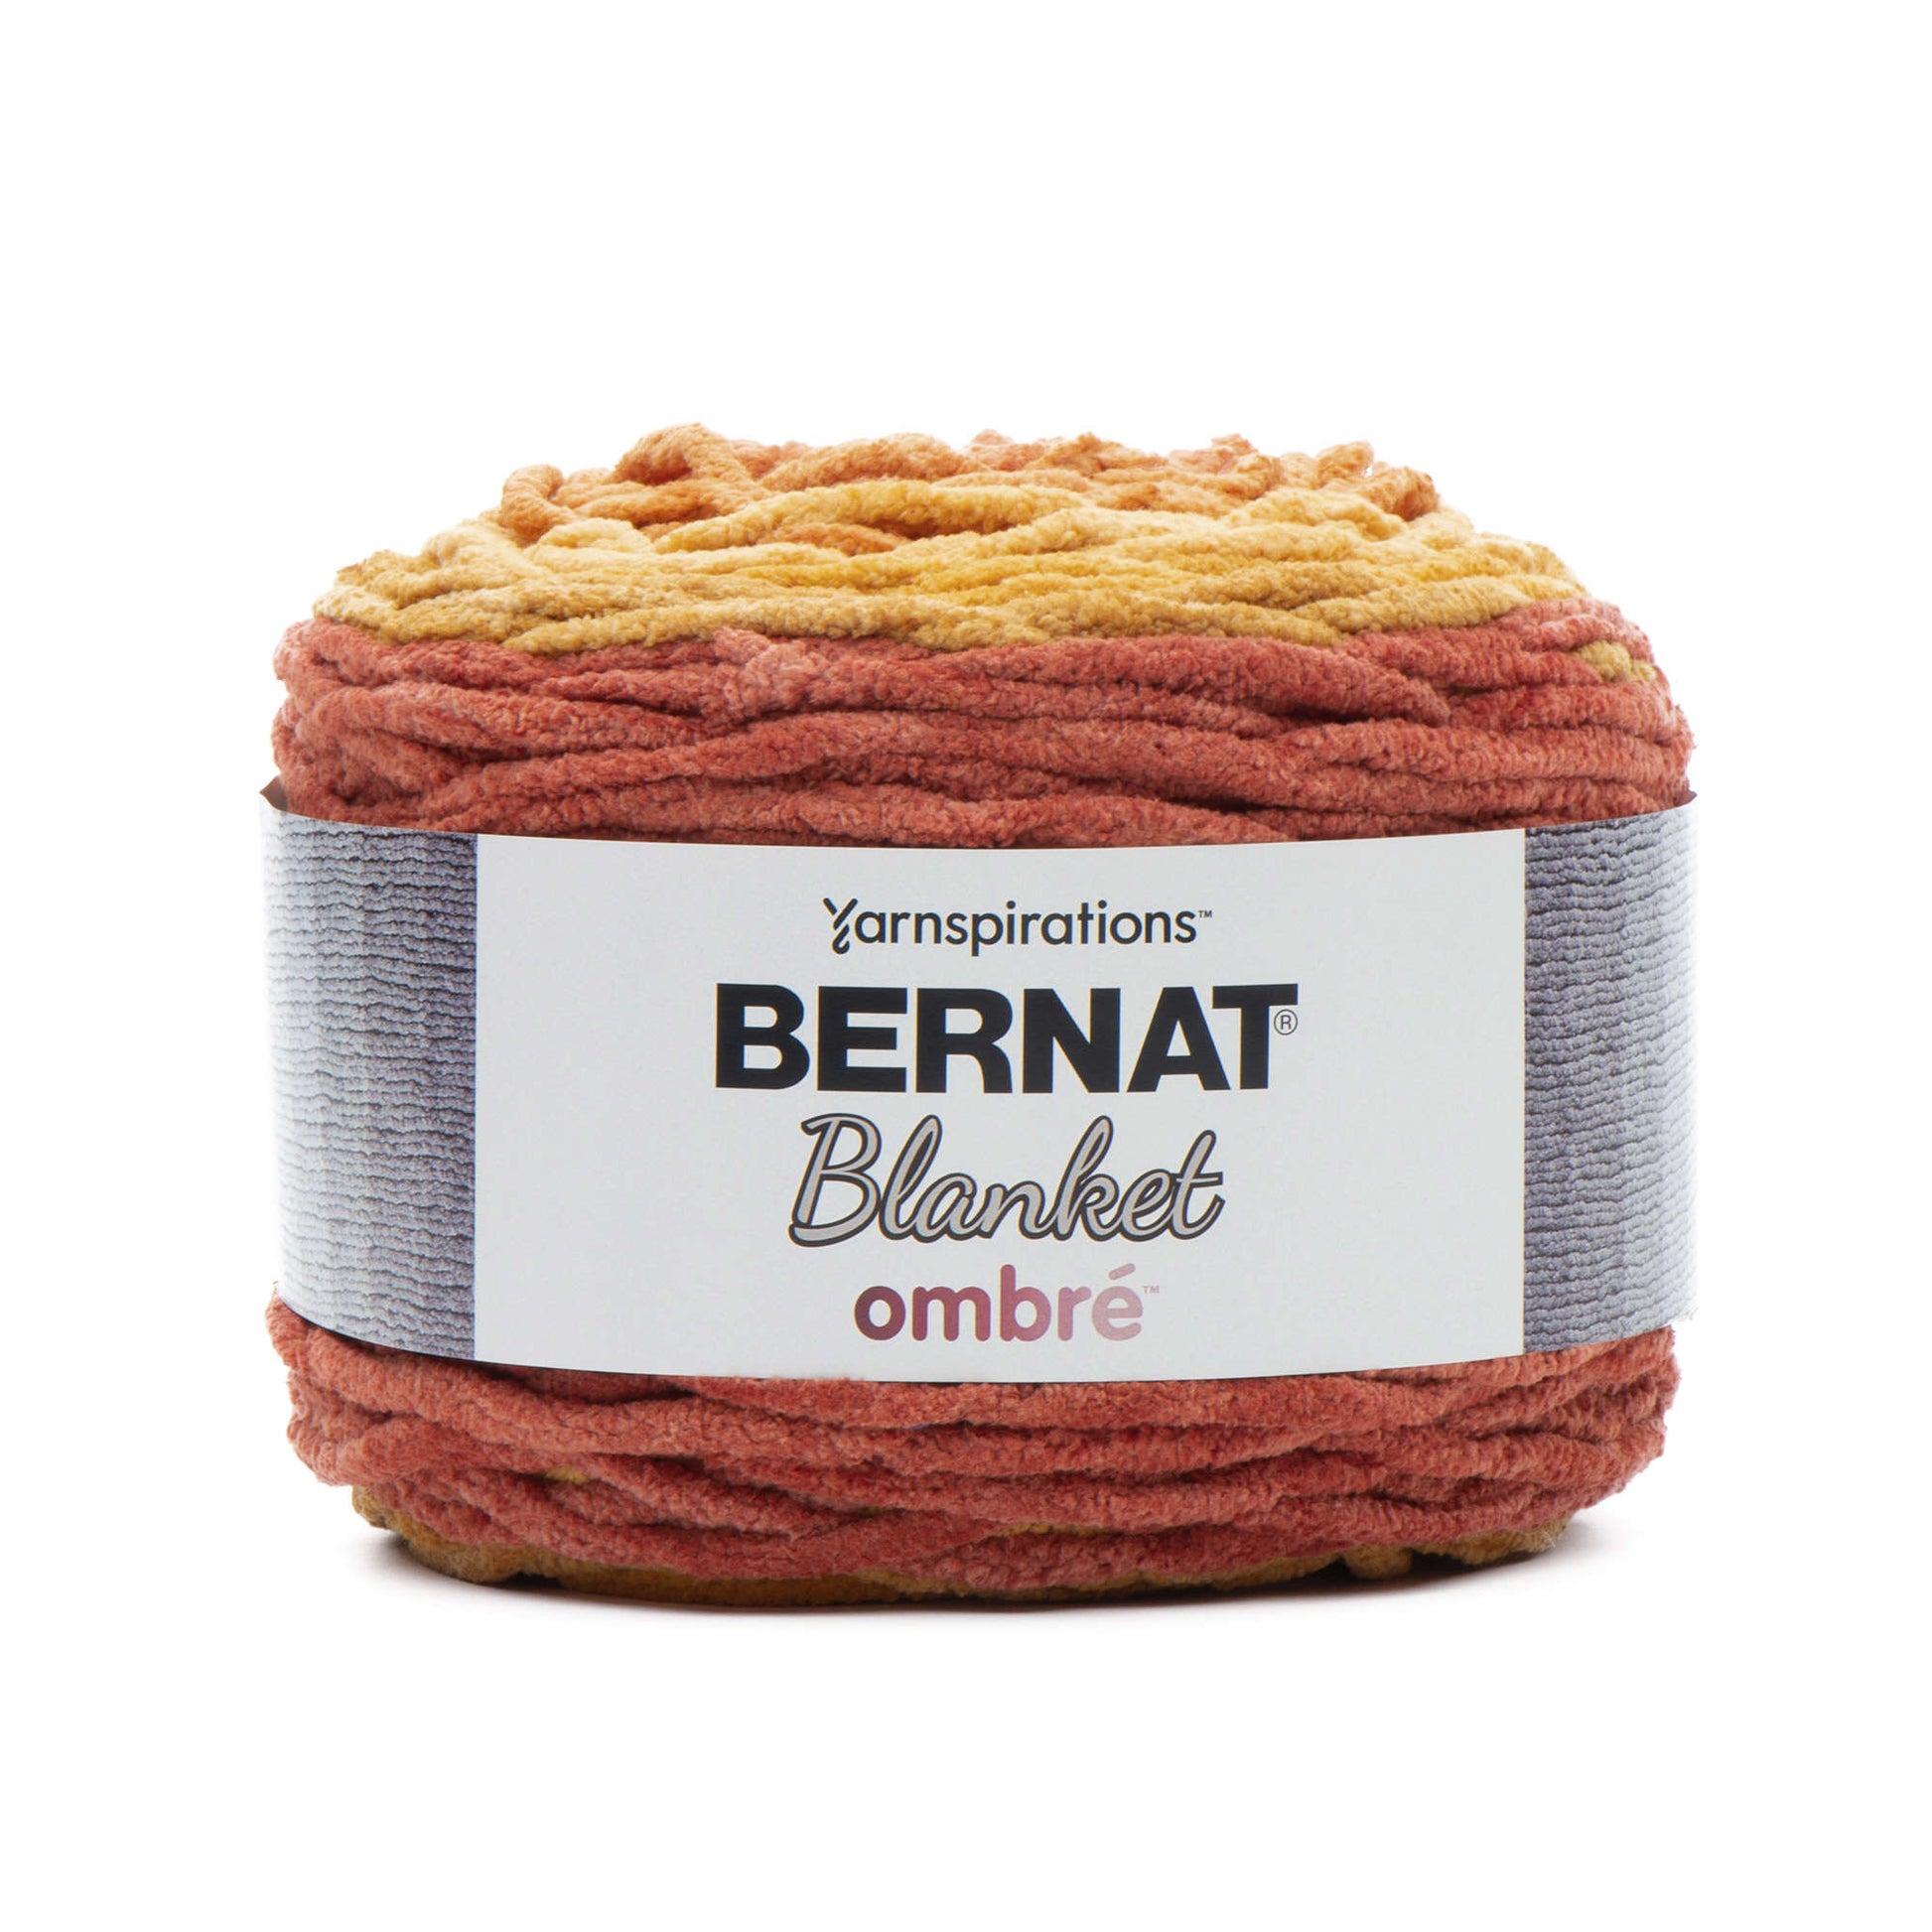 Bernat Blanket Ombre Yarn-Purple Ombre, 1 count - Jay C Food Stores